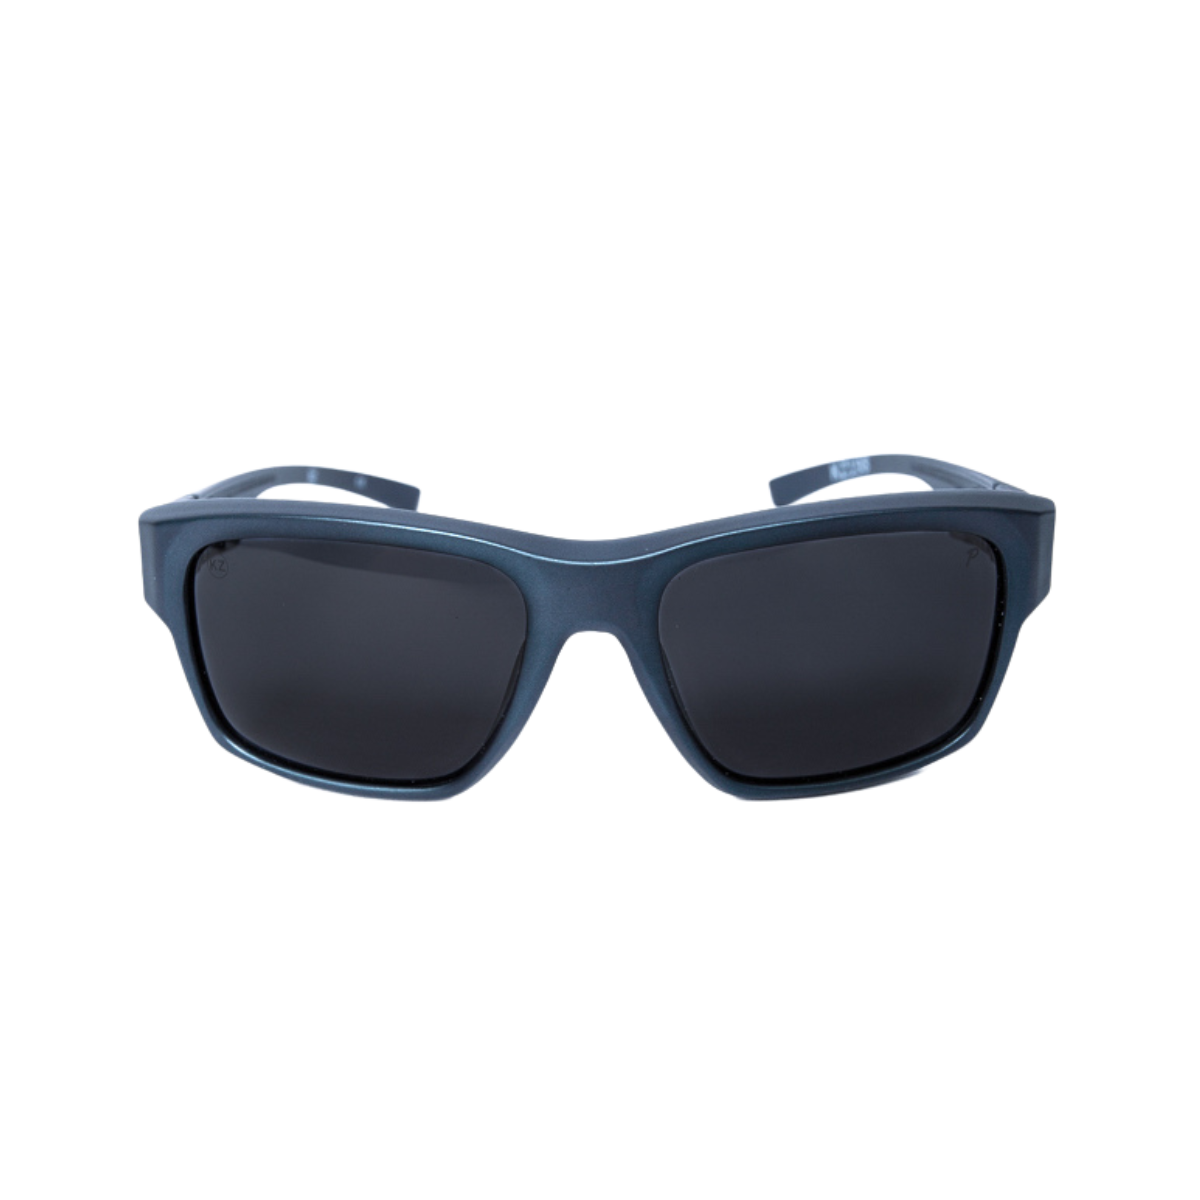 Brocks - Floating Sunglasses KZ Deep Ocean Blue / Black